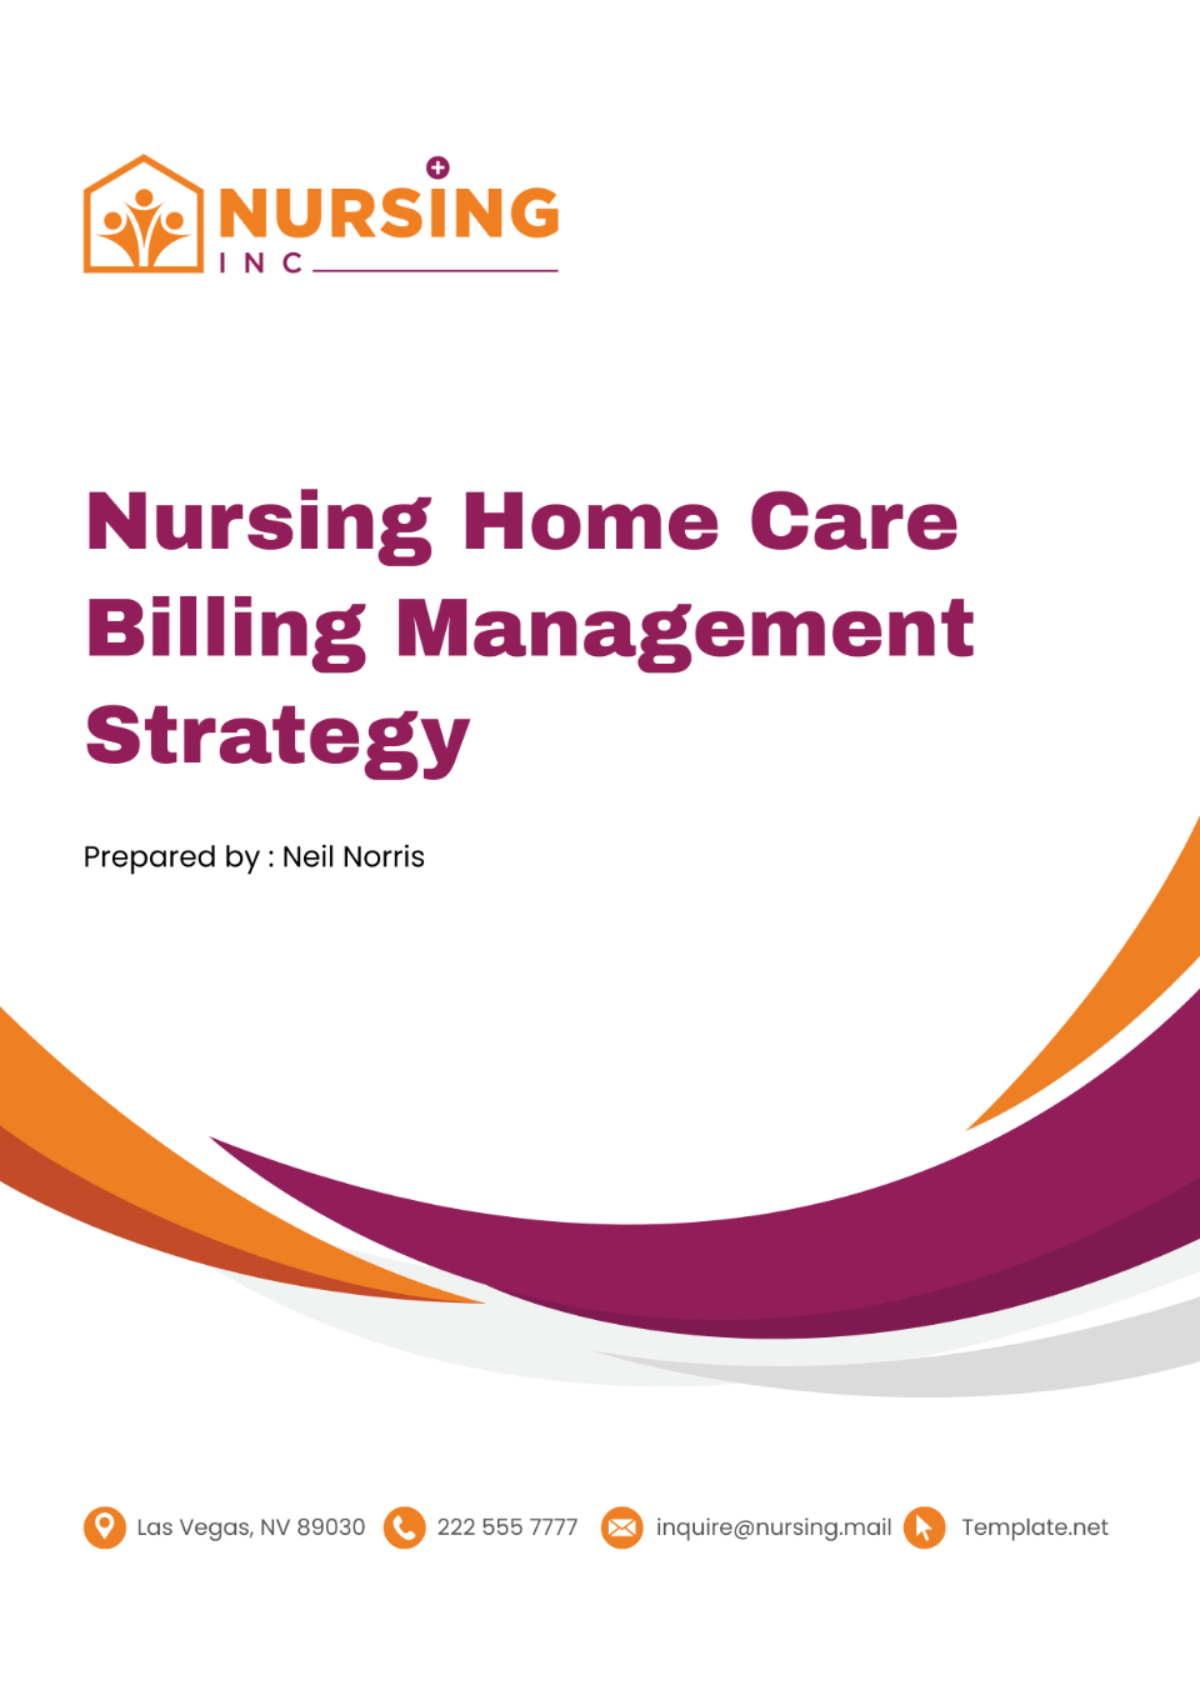 Nursing Home Care Billing Management Strategy Template